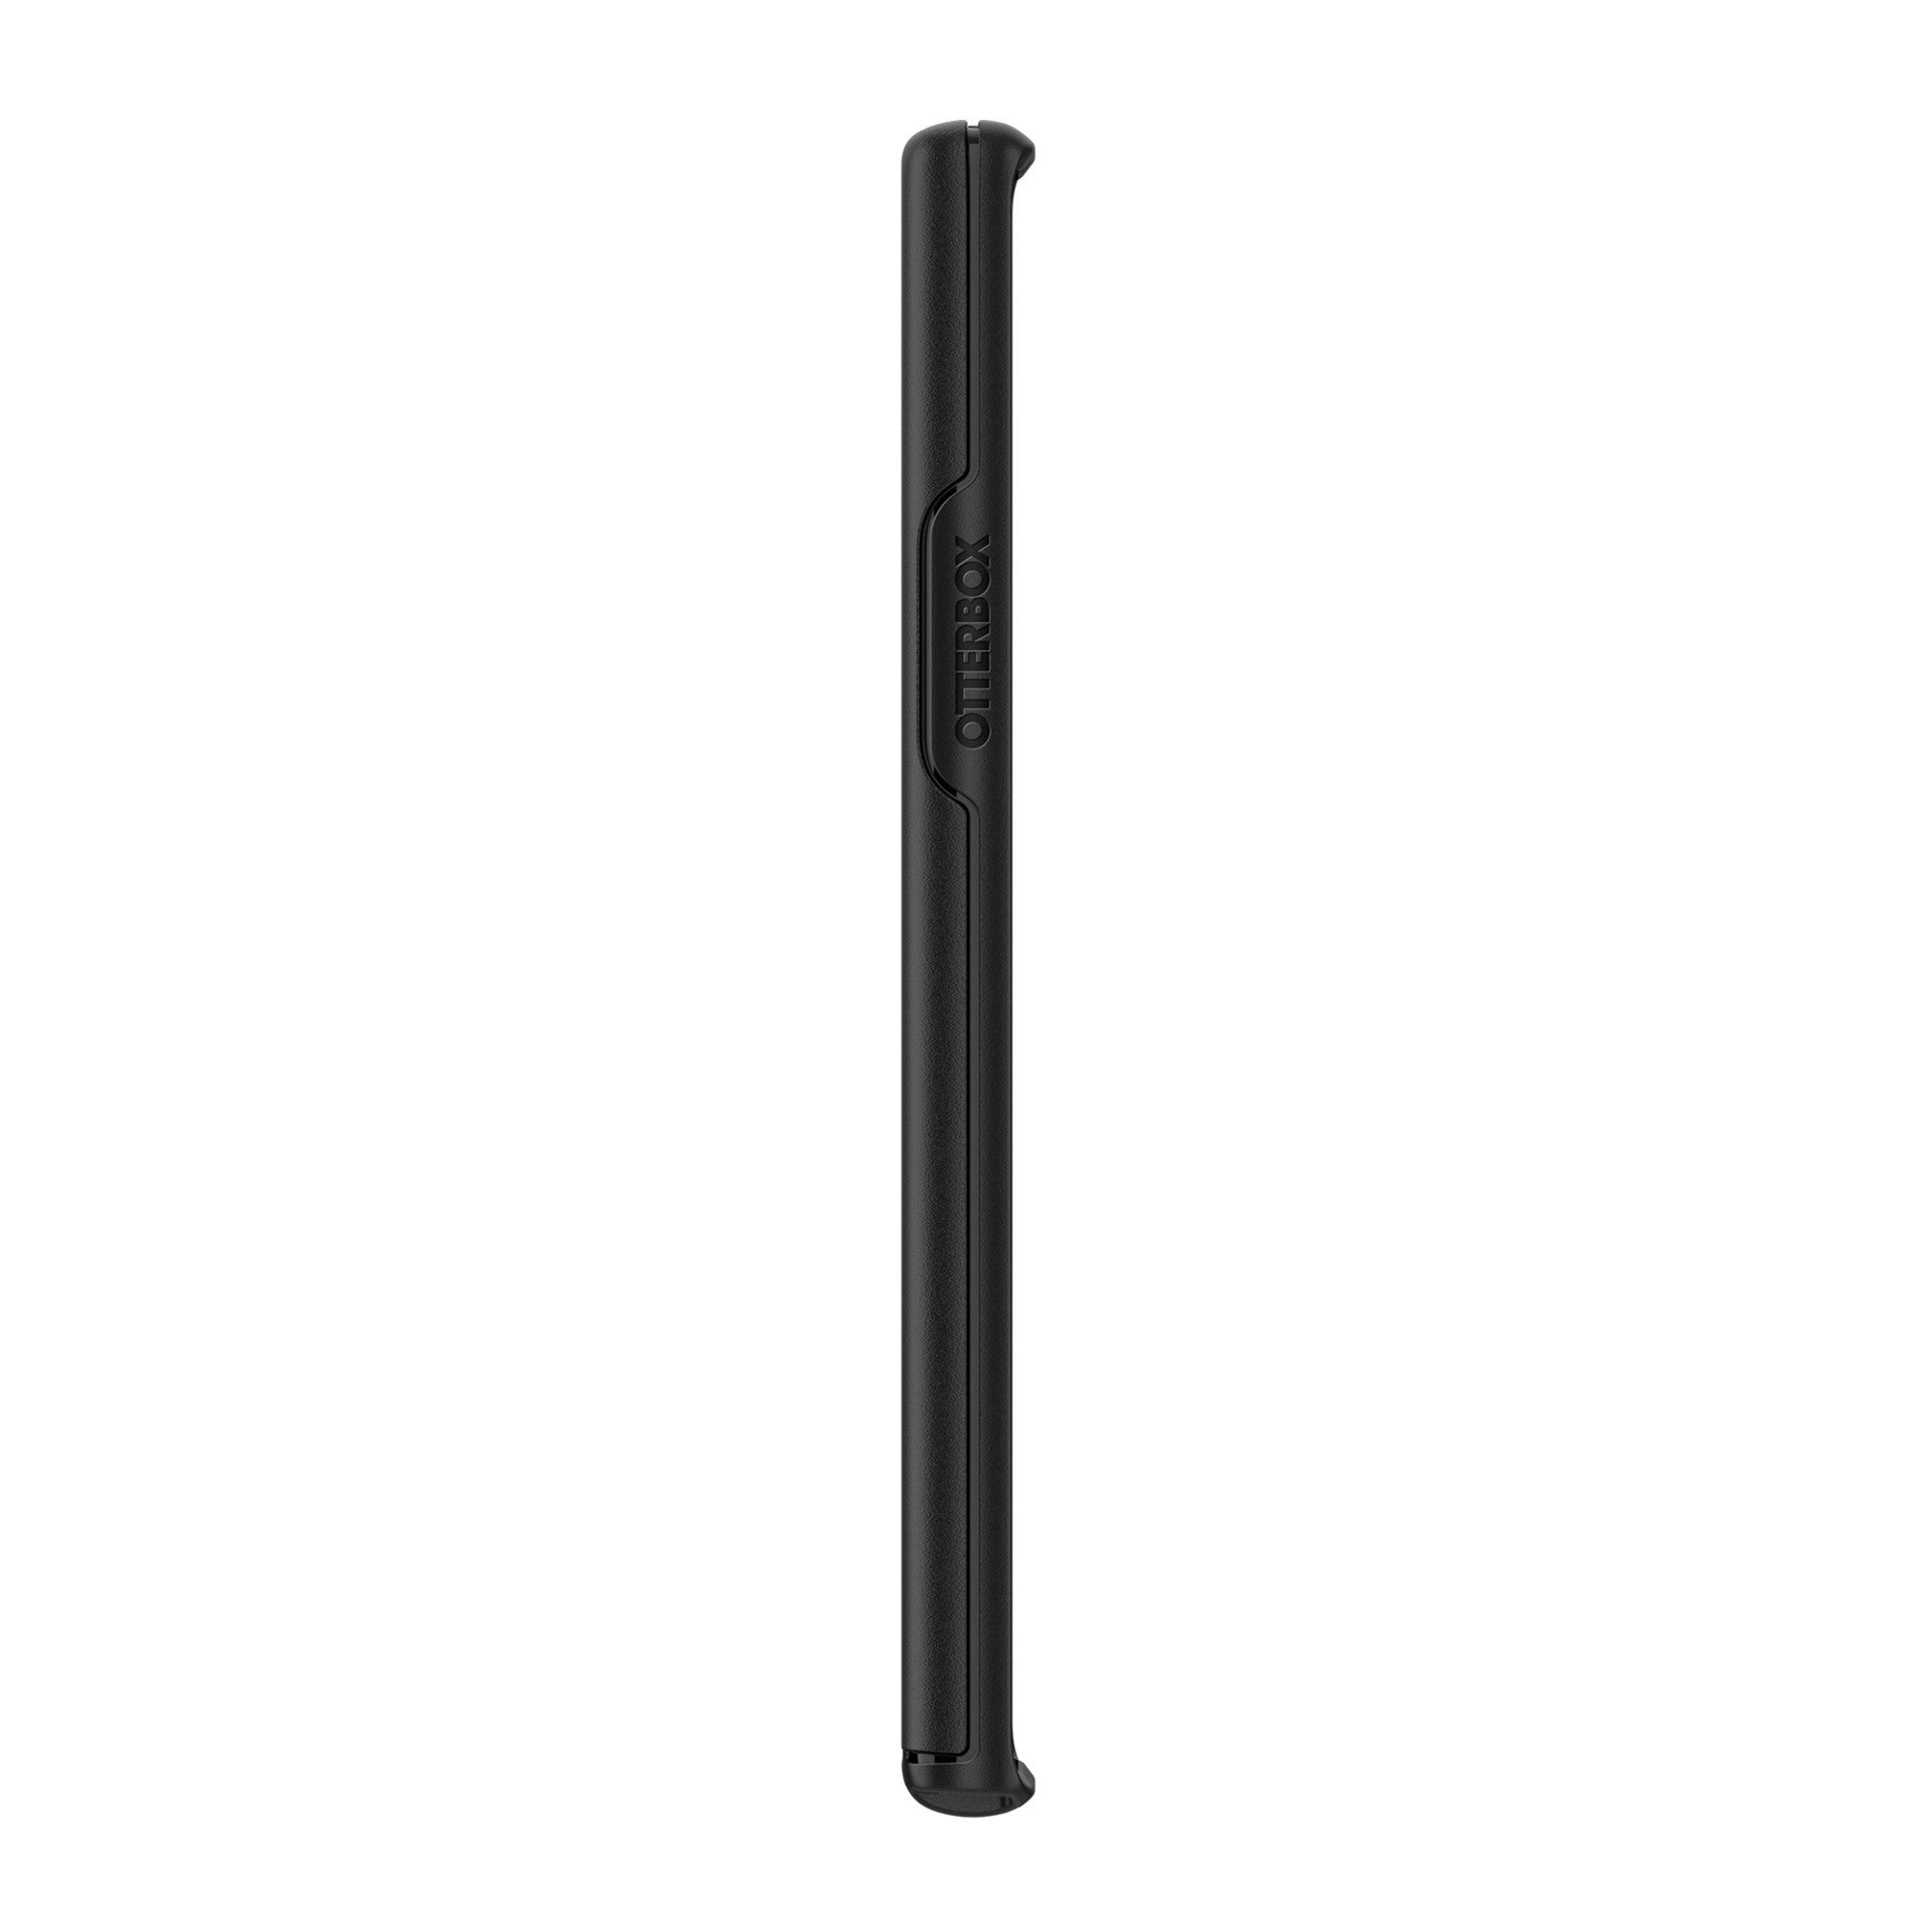 Samsung Galaxy S22 5G Otterbox Symmetry Series Case - Black - 15-09551